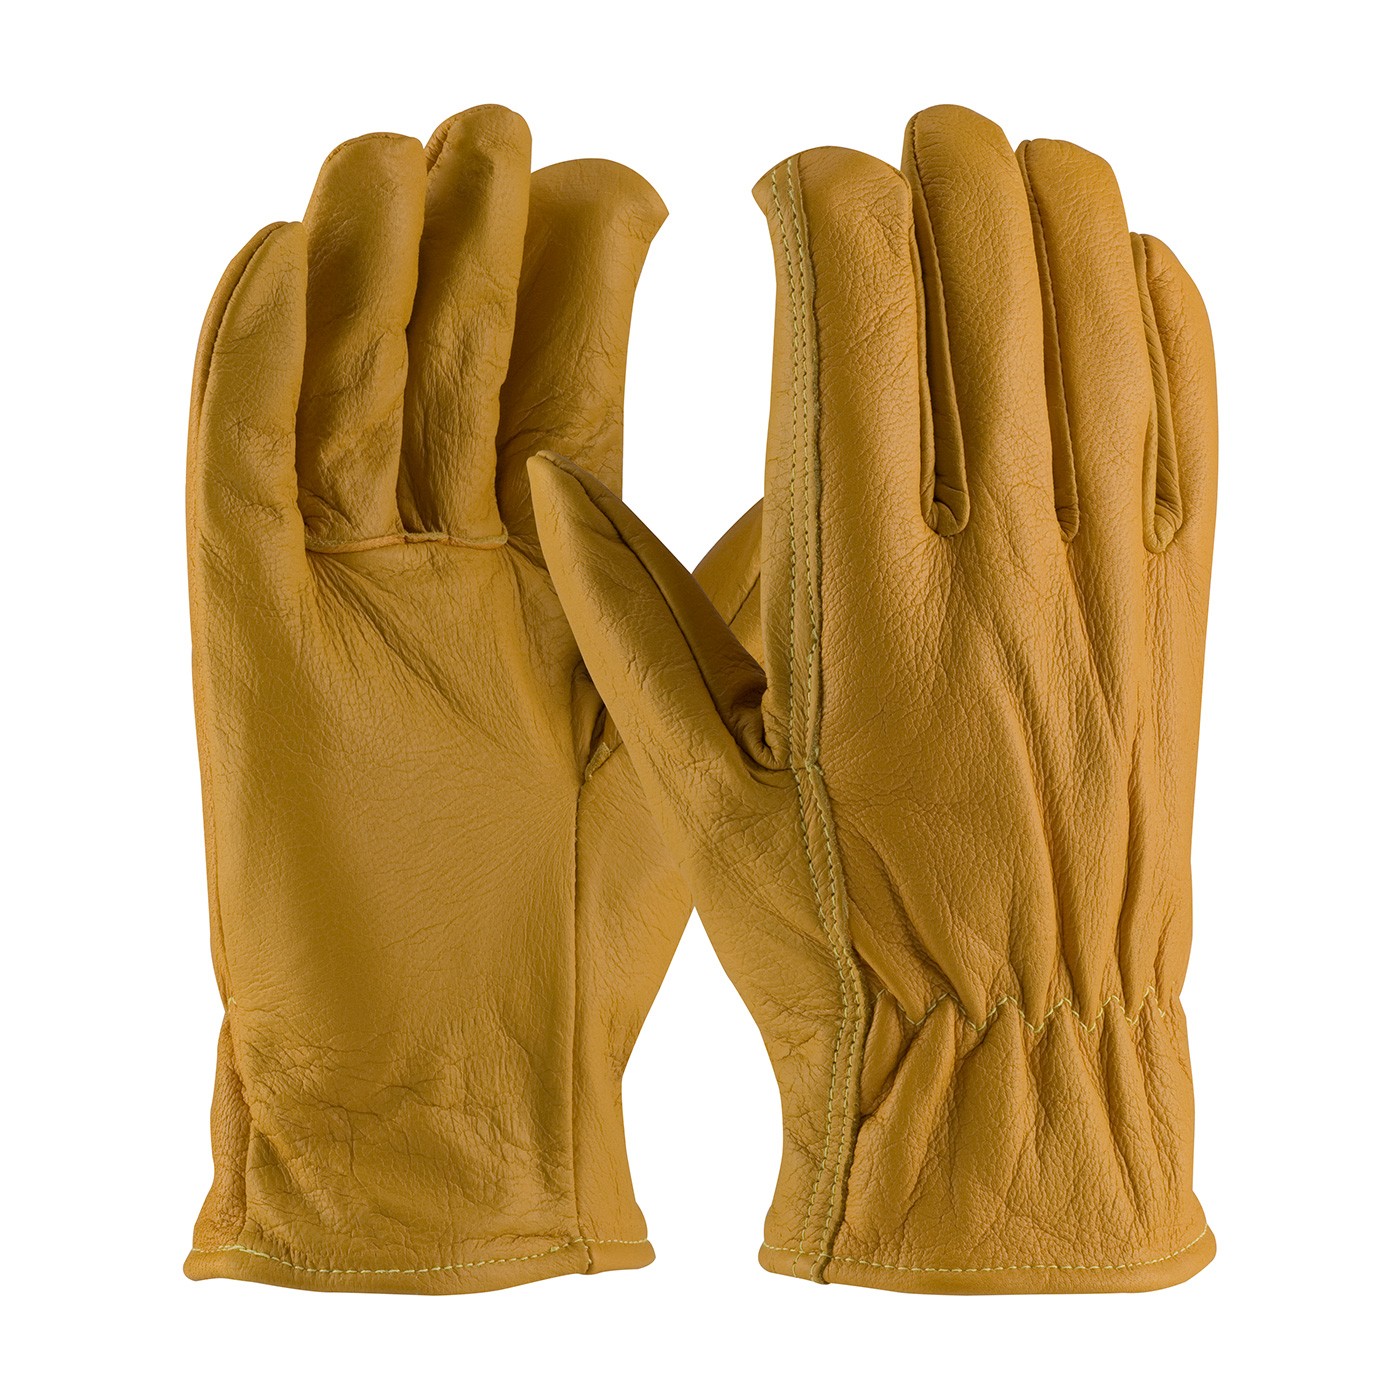 Kut Gard® Top Grain Goatskin Leather Glove with Kevlar® Liner - Light Weight  (#09-K3700)